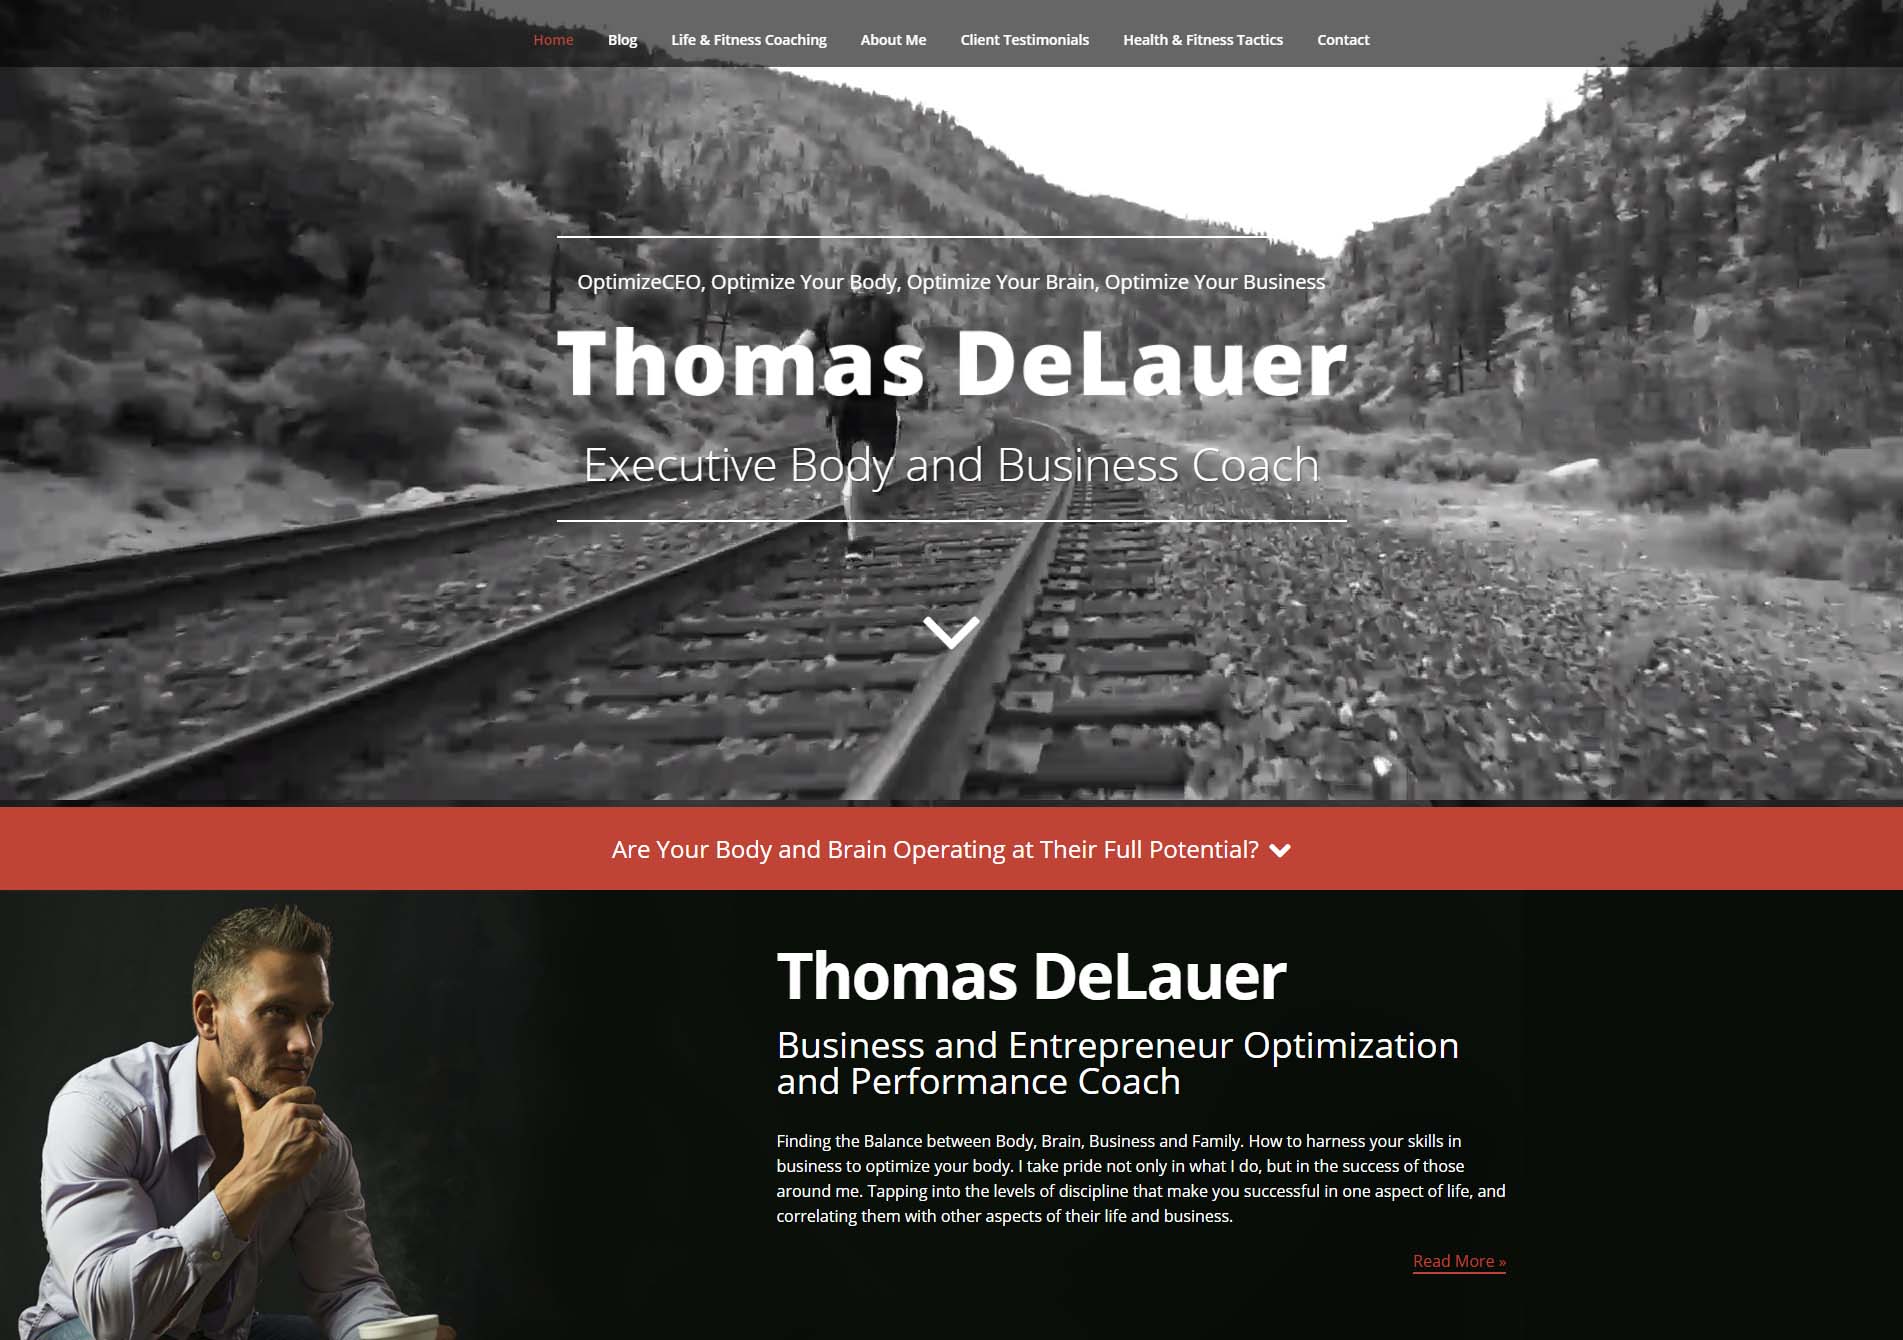 Before Thomas DeLauer